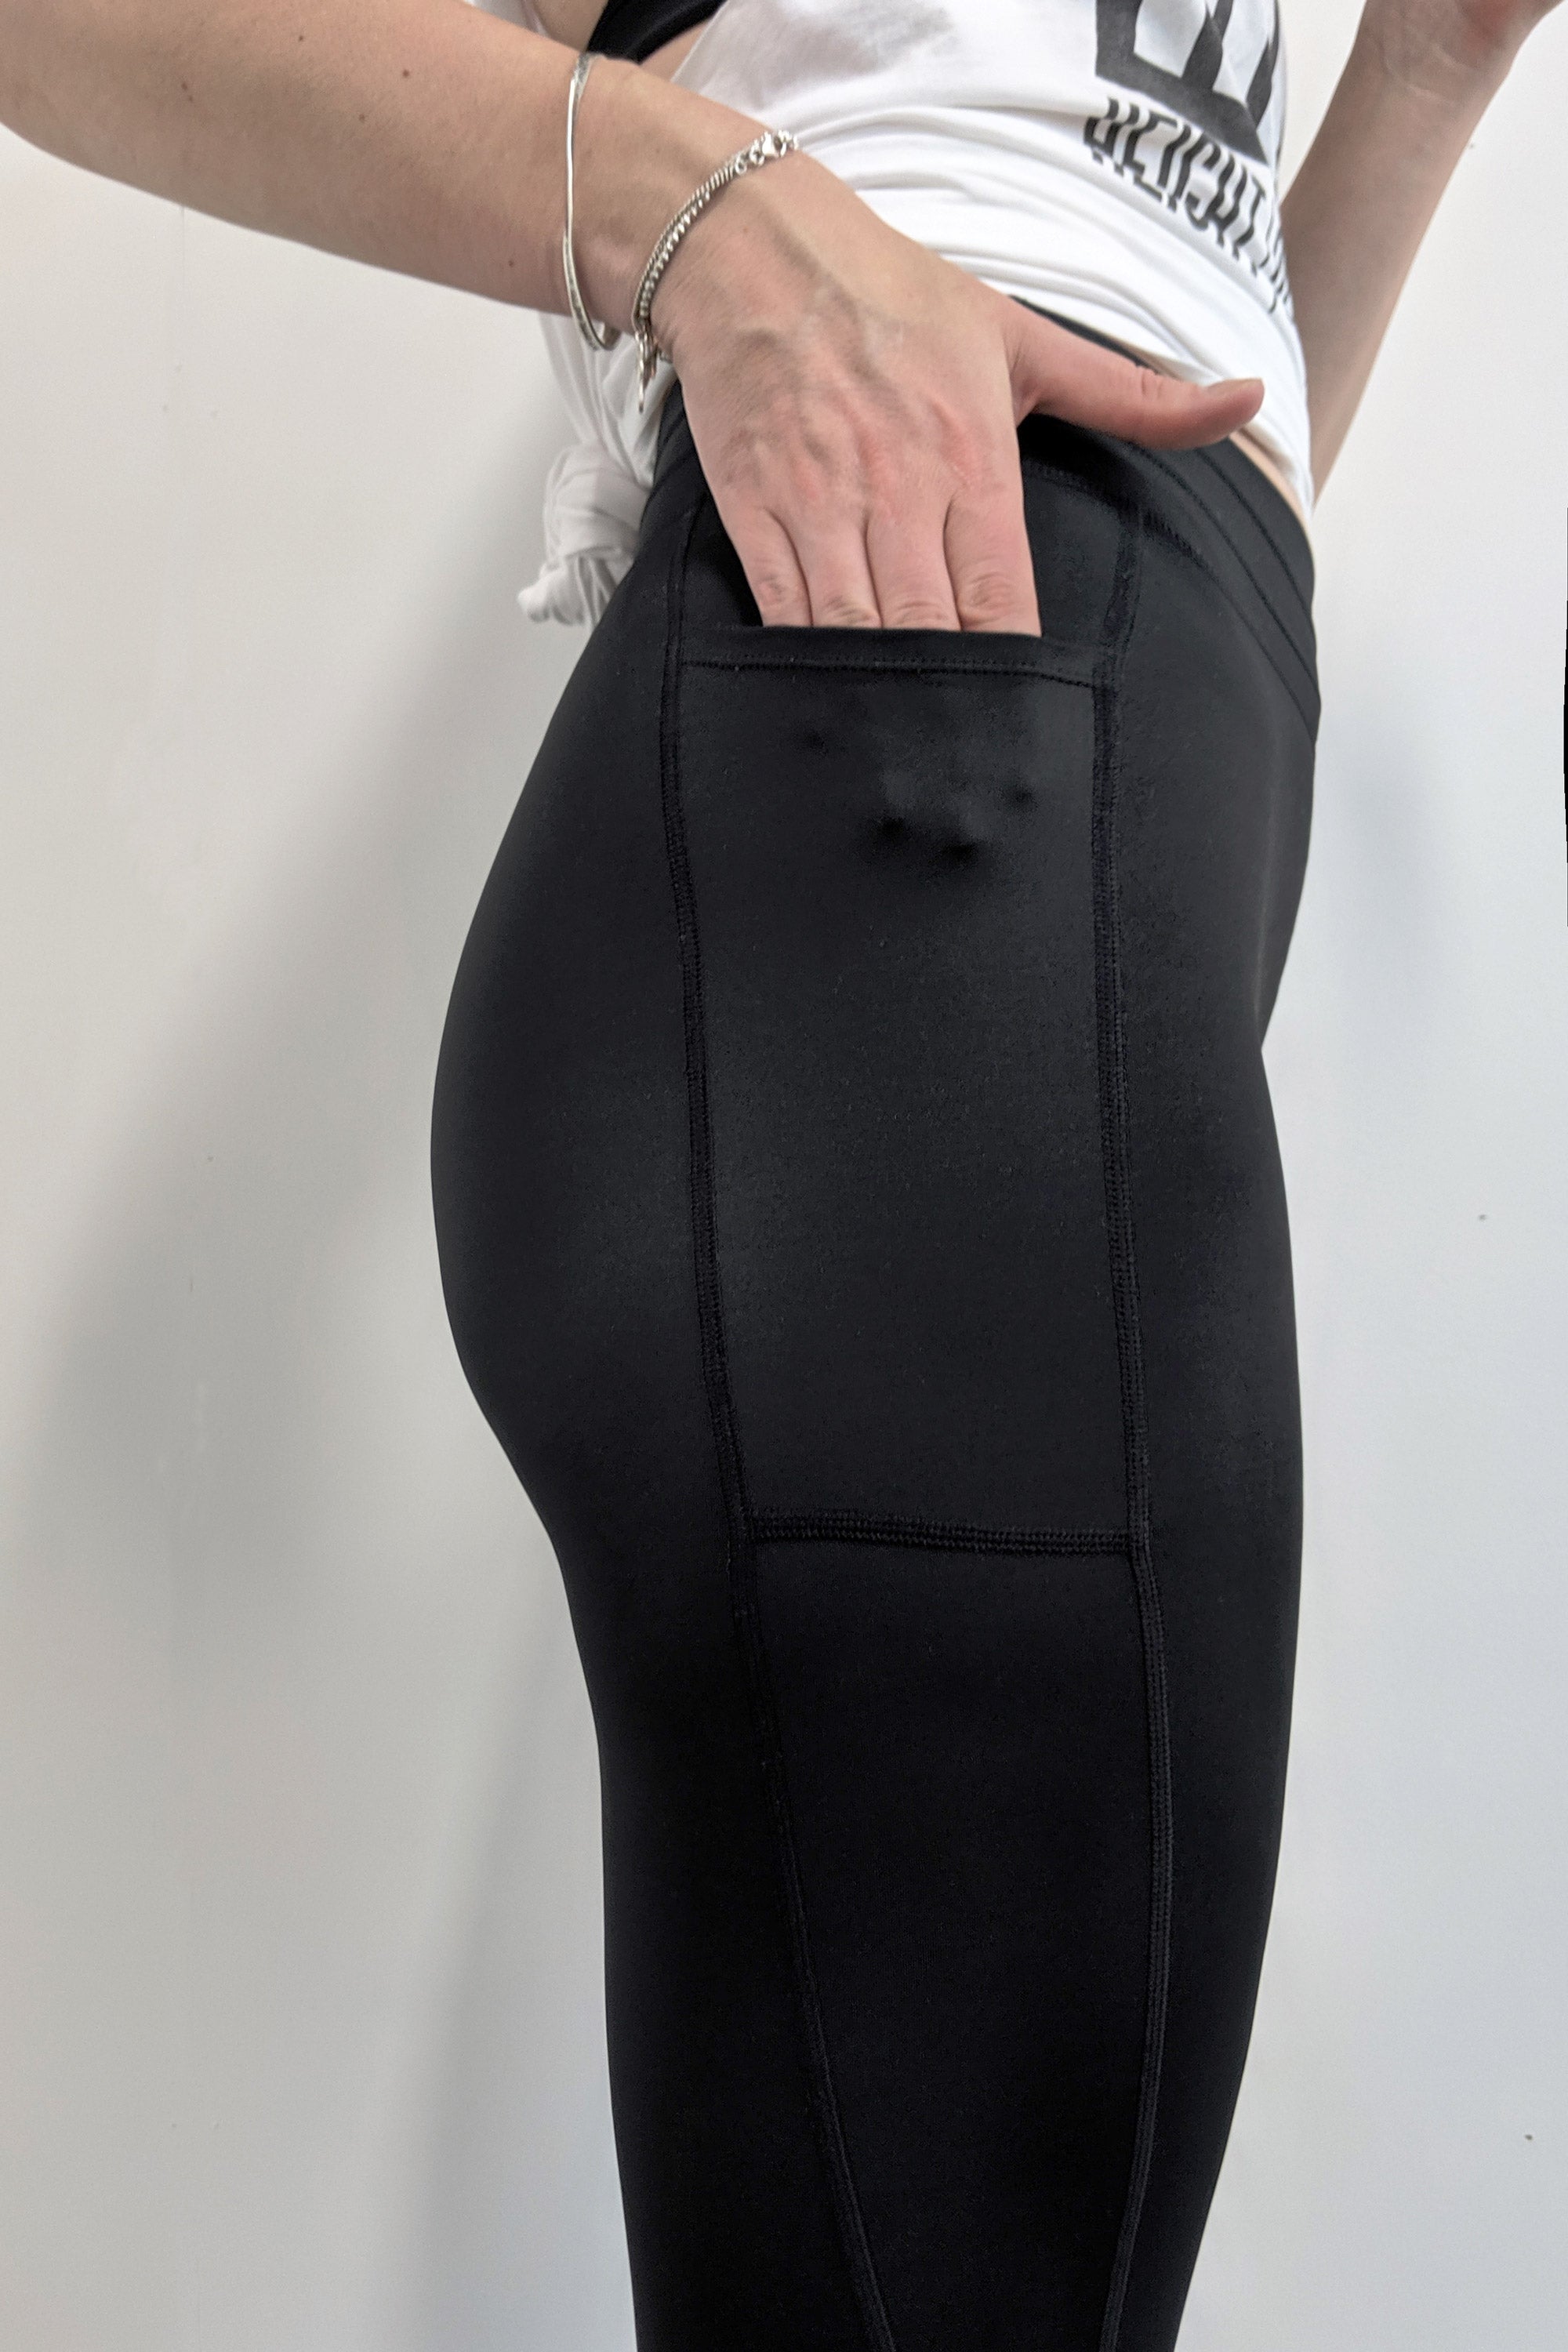 The black technical leggings  Tall women, Clothing for tall women